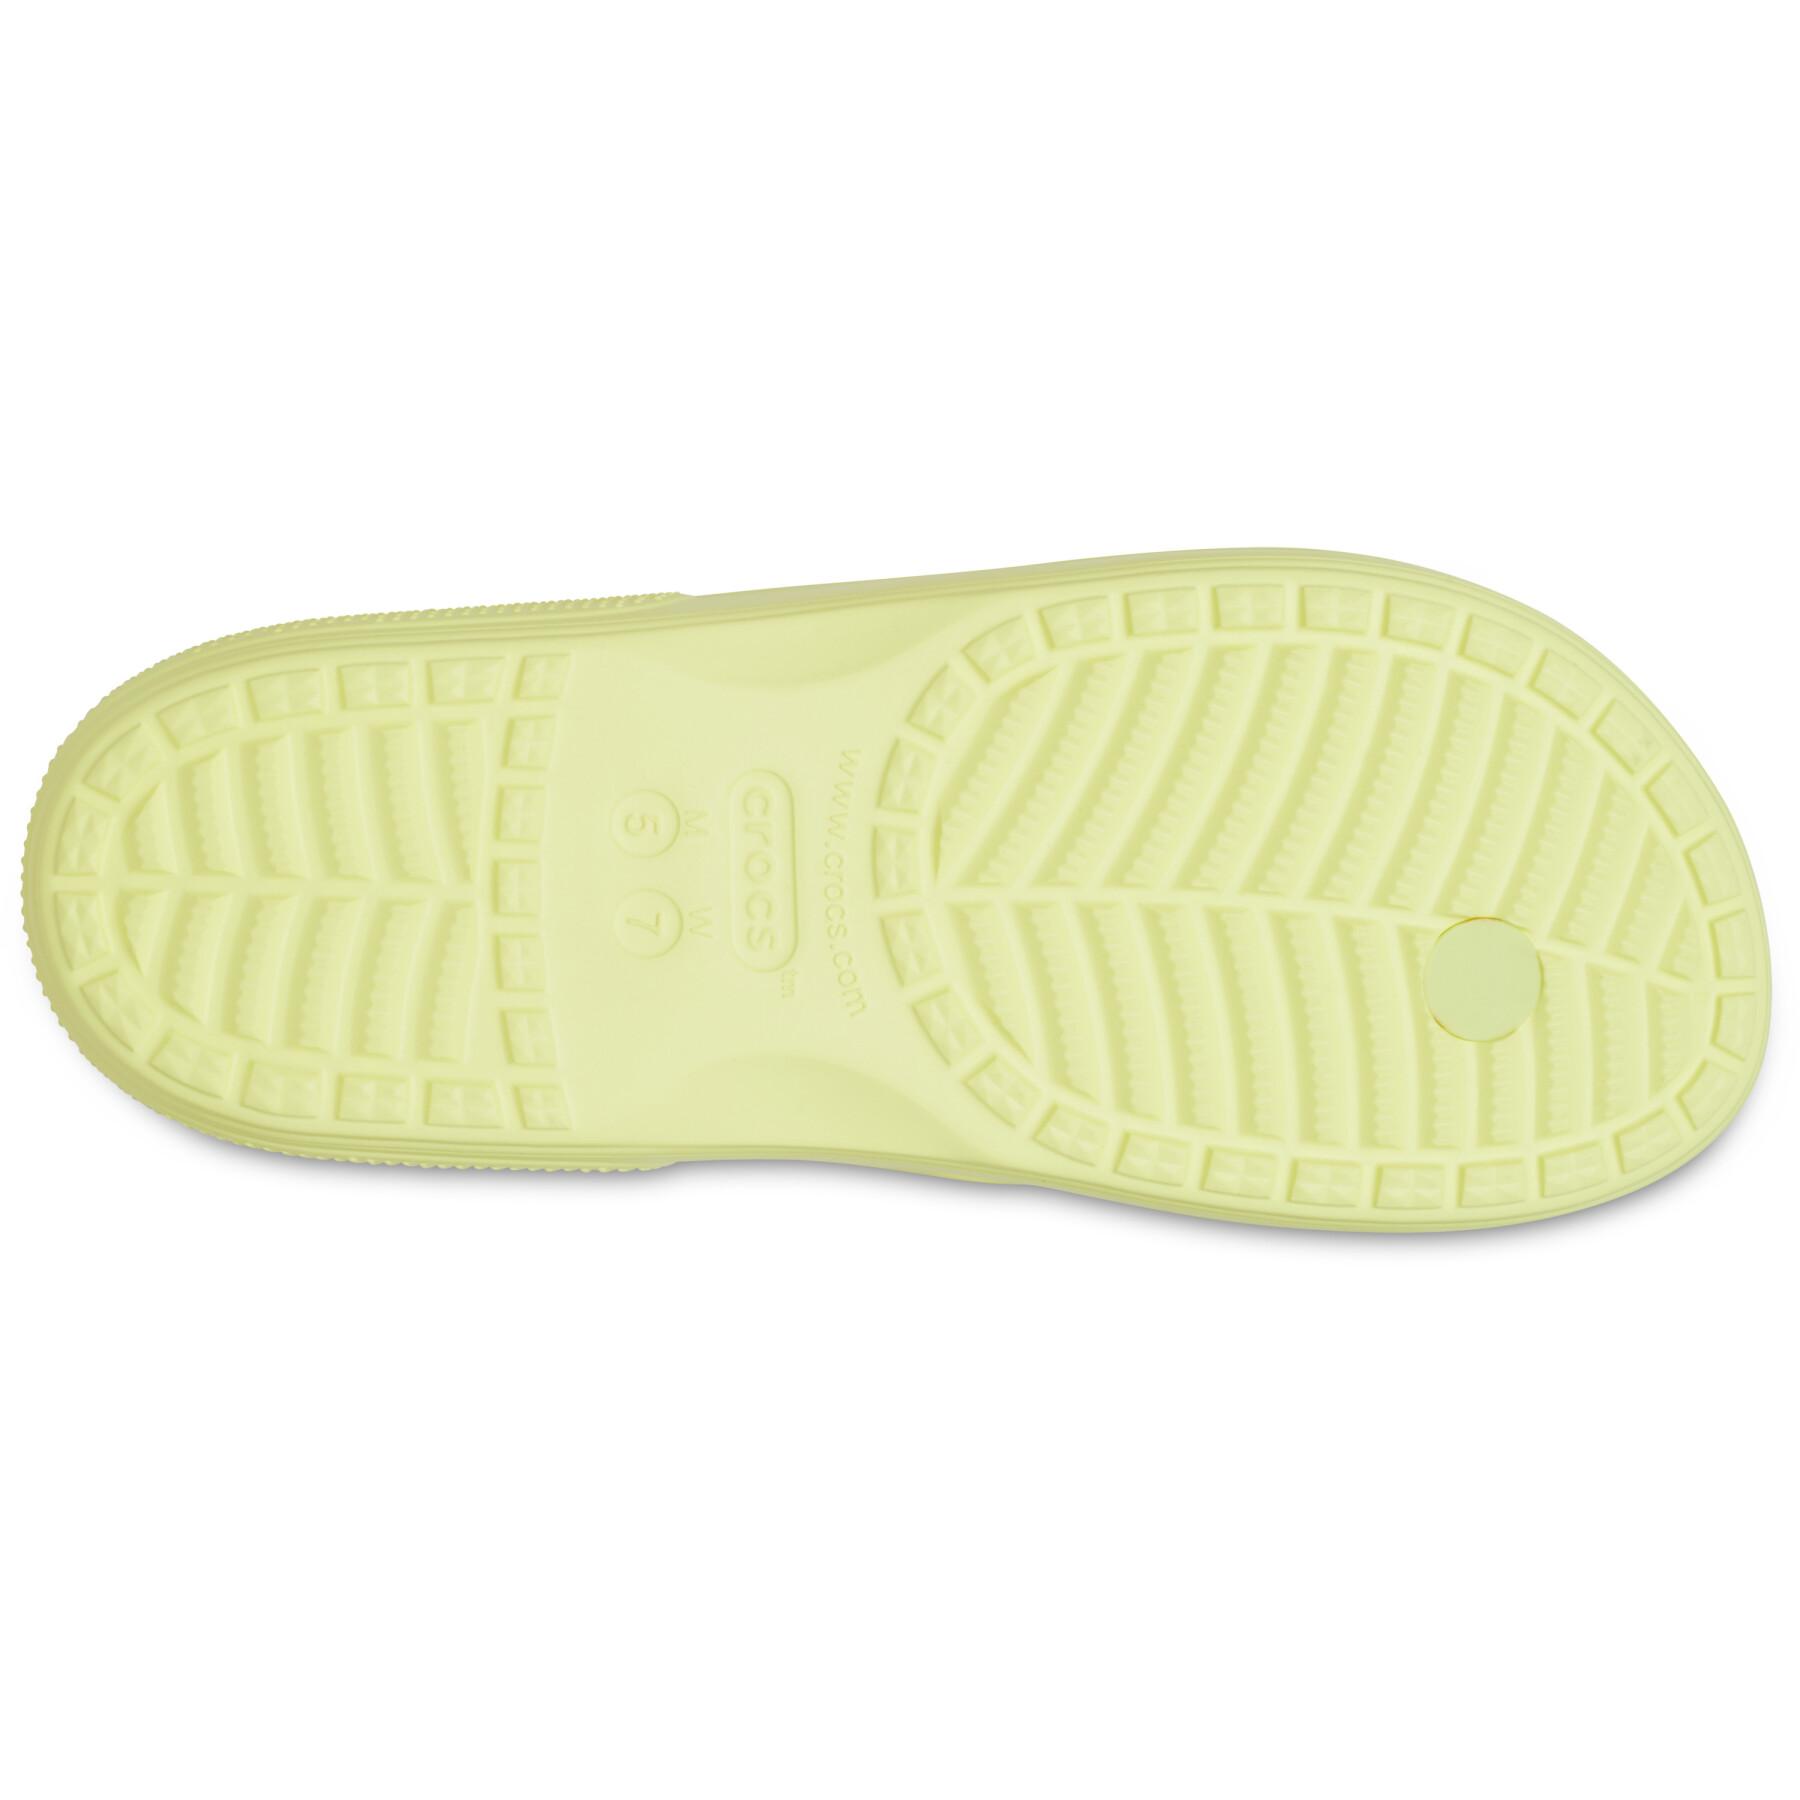 Slippers Crocs Classic Crocs